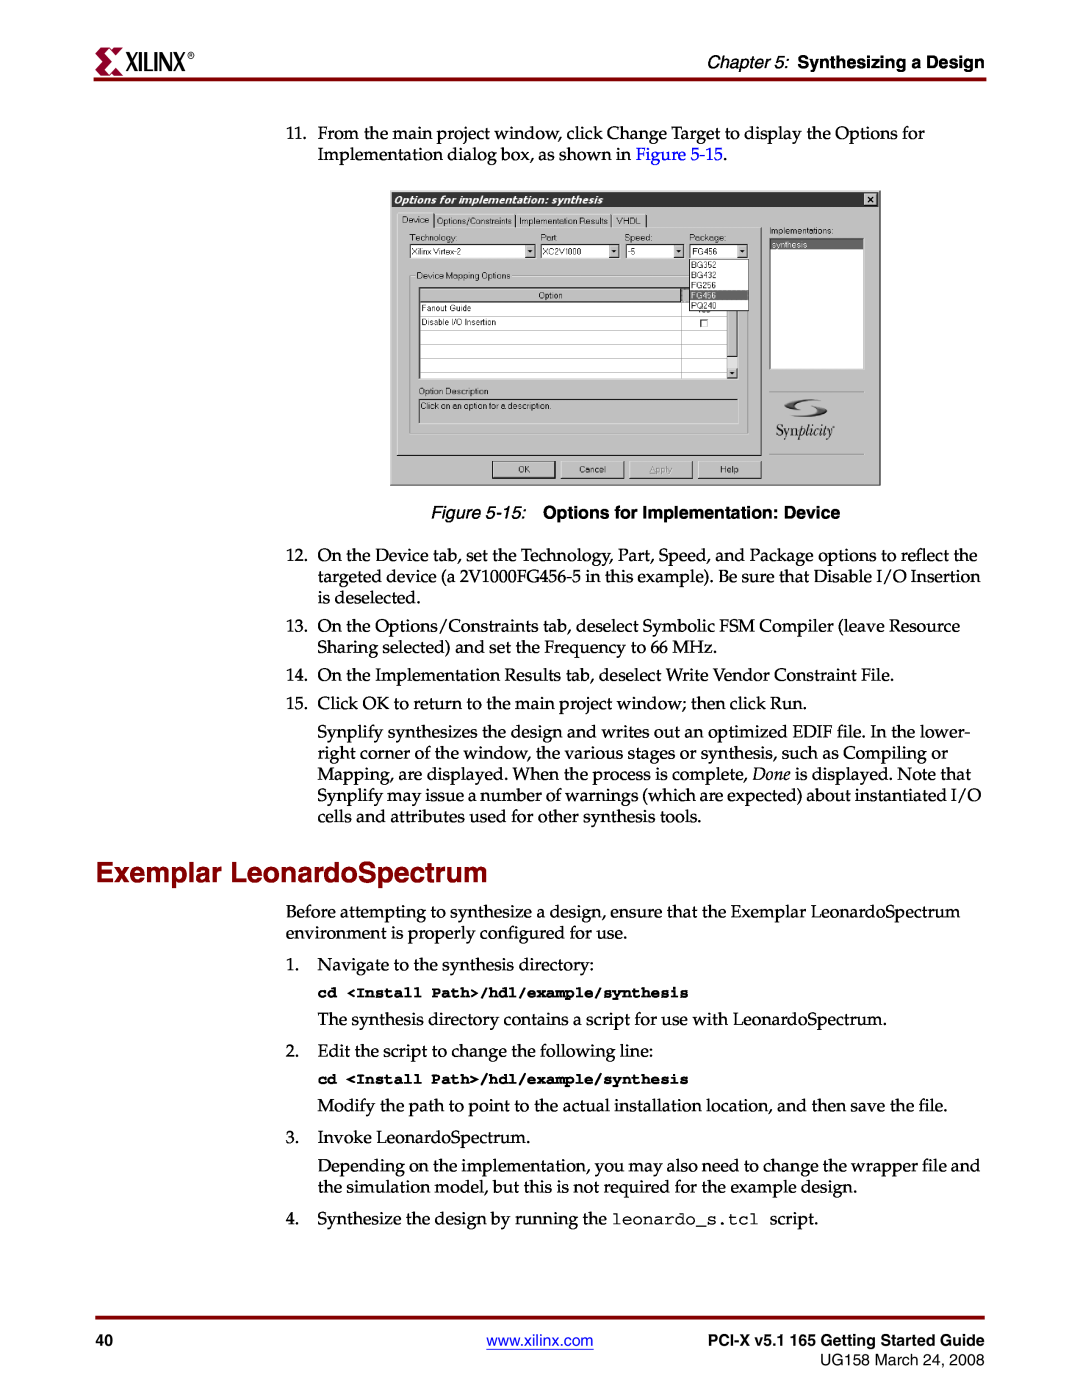 Xilinx PCI-X v5.1 manual Exemplar LeonardoSpectrum, 15 Options for Implementation Device, Synthesizing a Design 